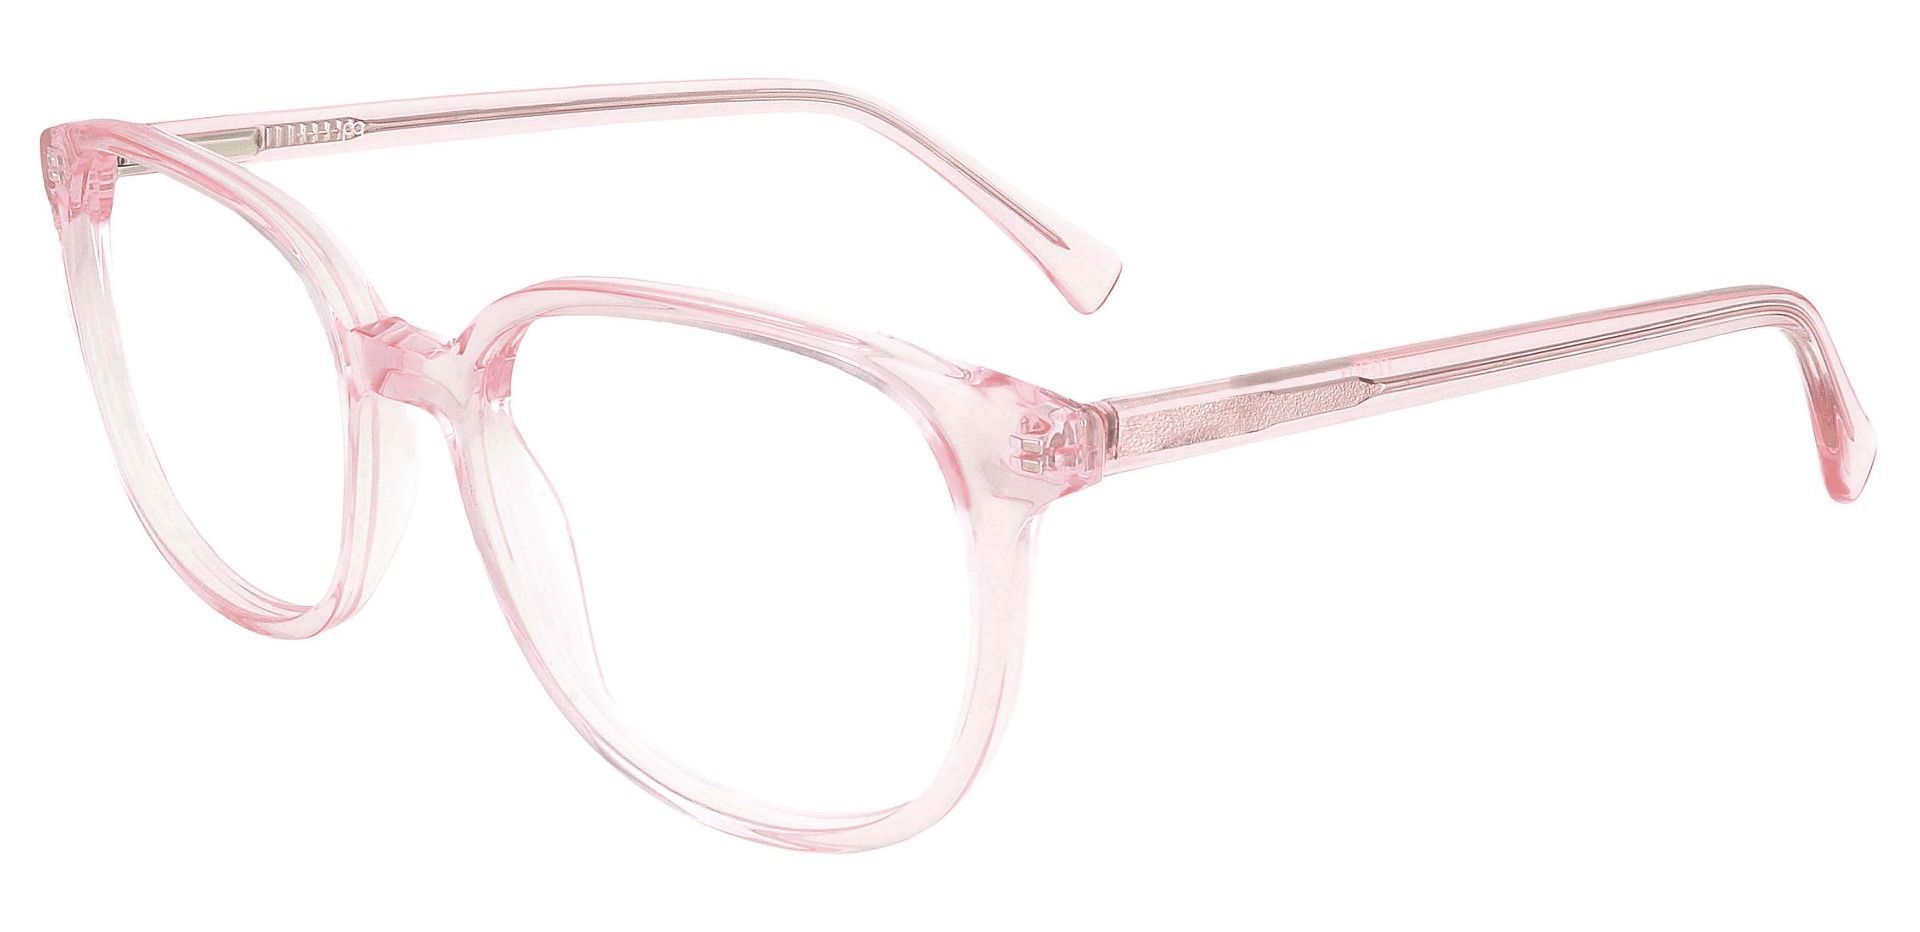 Presley Square Prescription Glasses - Pink Crystal | Women's Eyeglasses ...